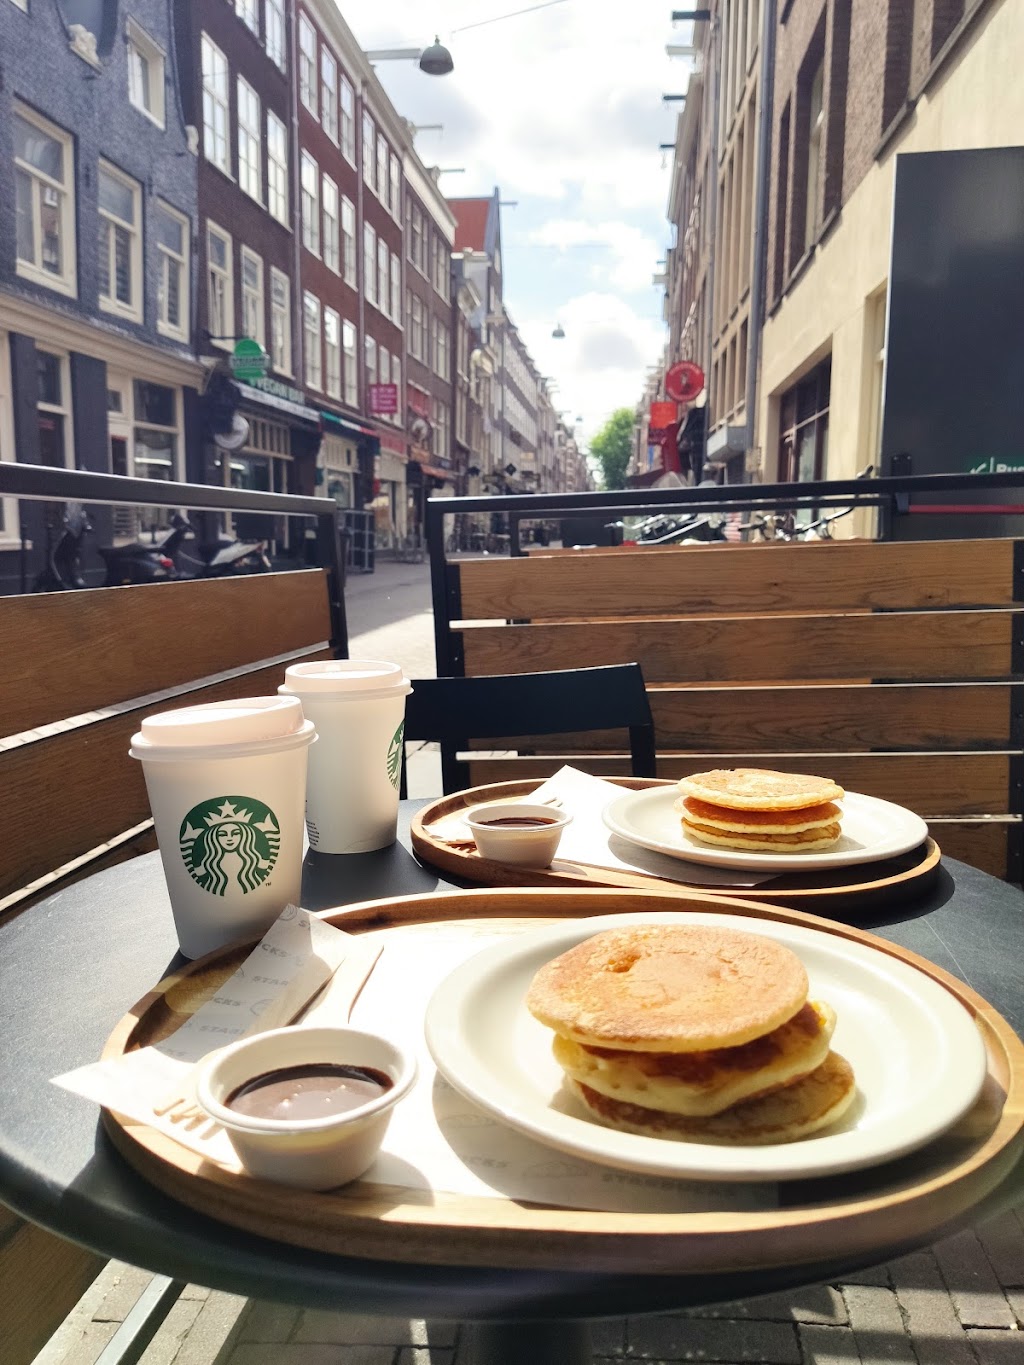 Starbucks | Leidsestraat 101, 1017 NZ Amsterdam, Netherlands | Phone: 020 624 1592